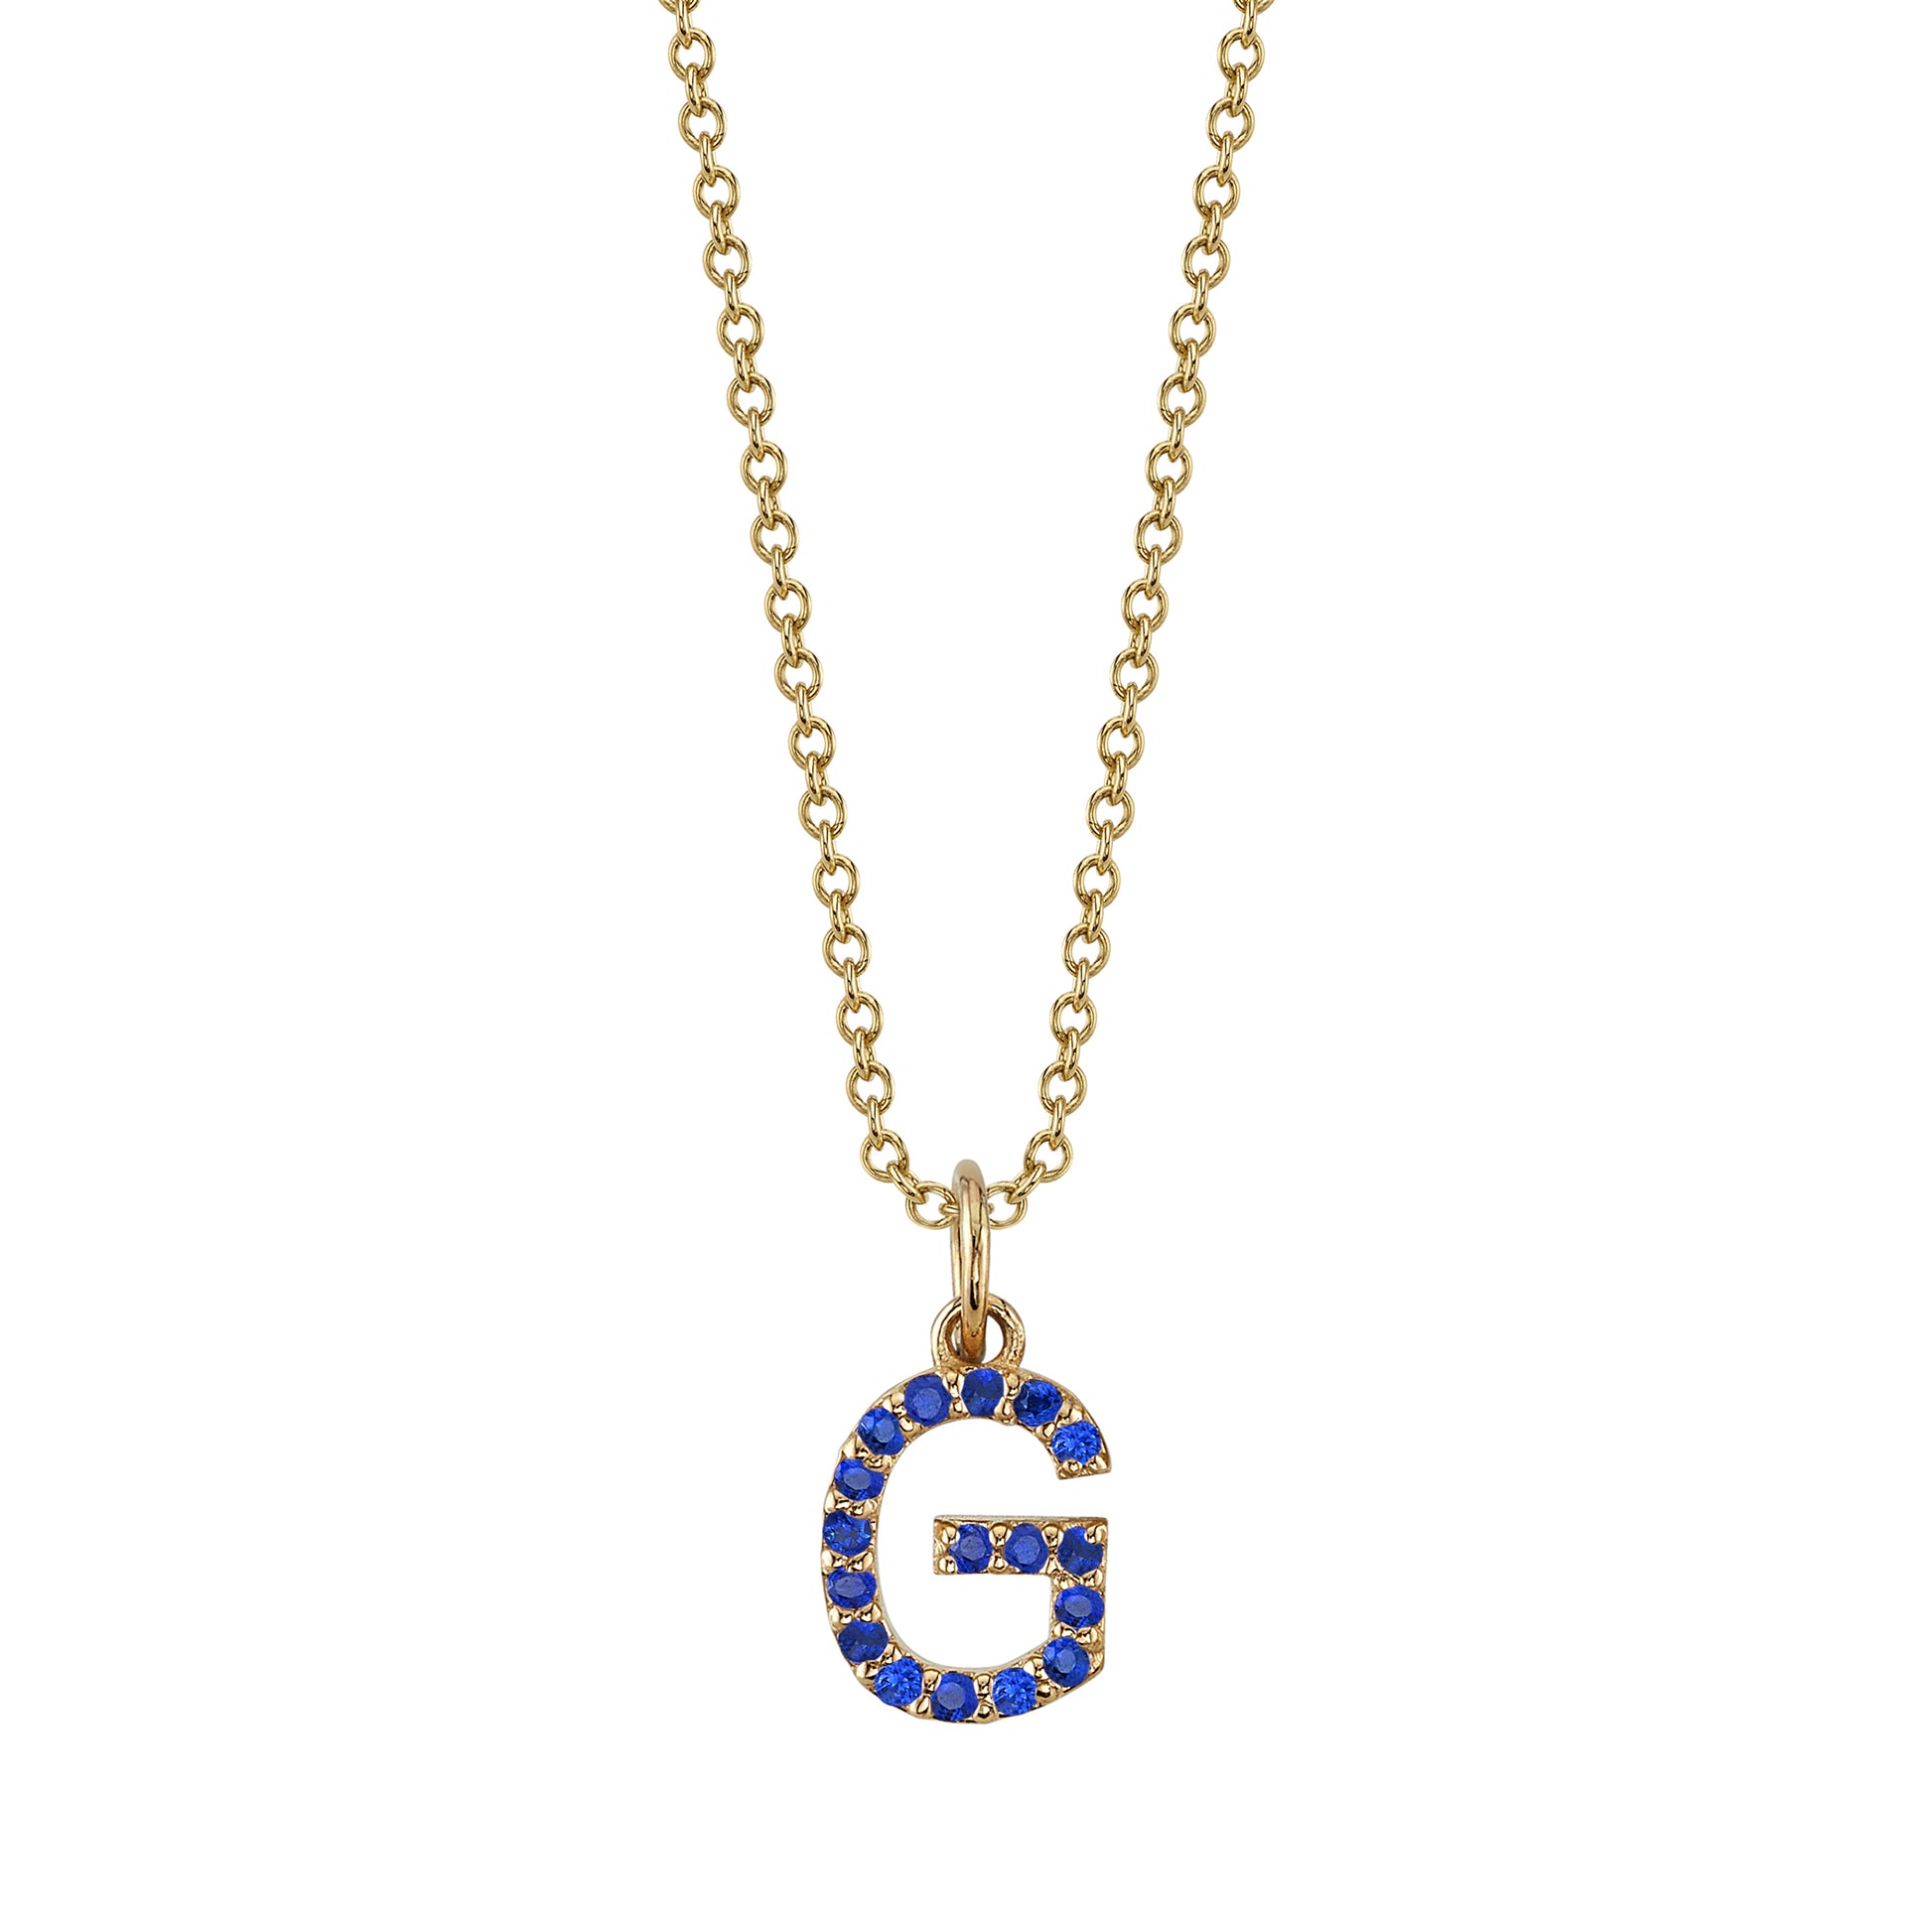 Monogram Necklace - G